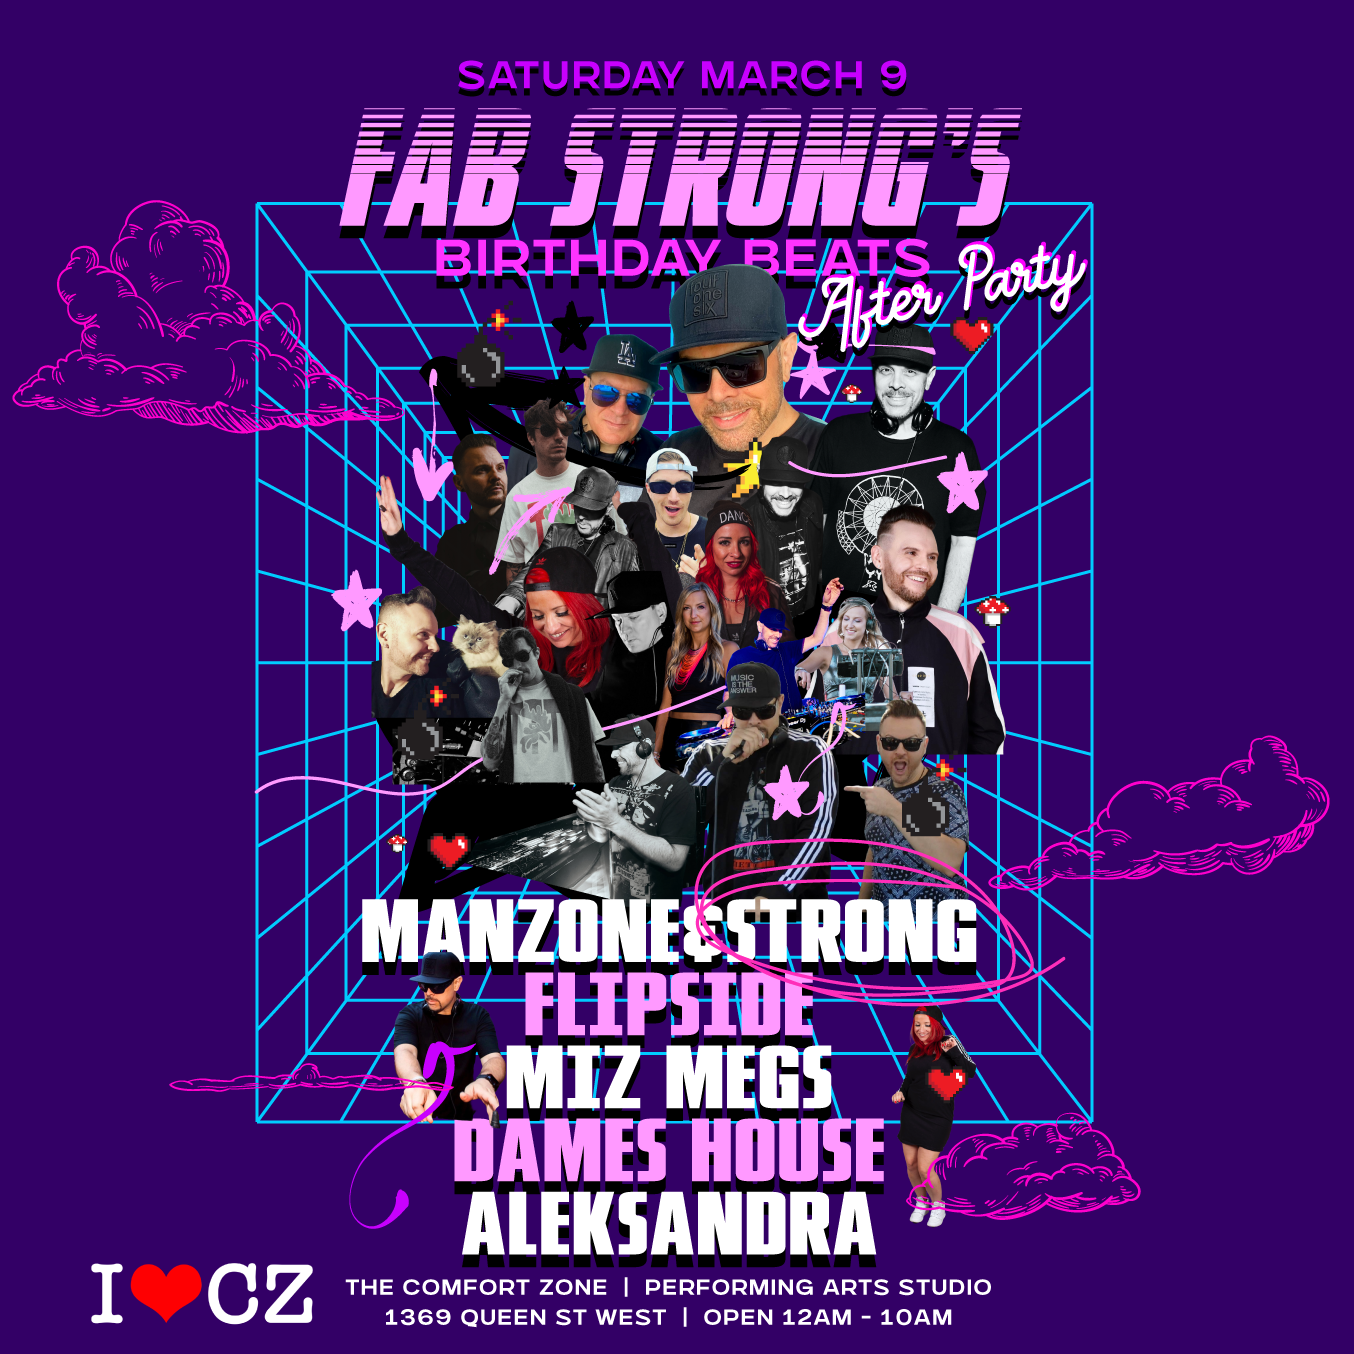 Fab Strong's Birthday Beats at CZ - フライヤー表